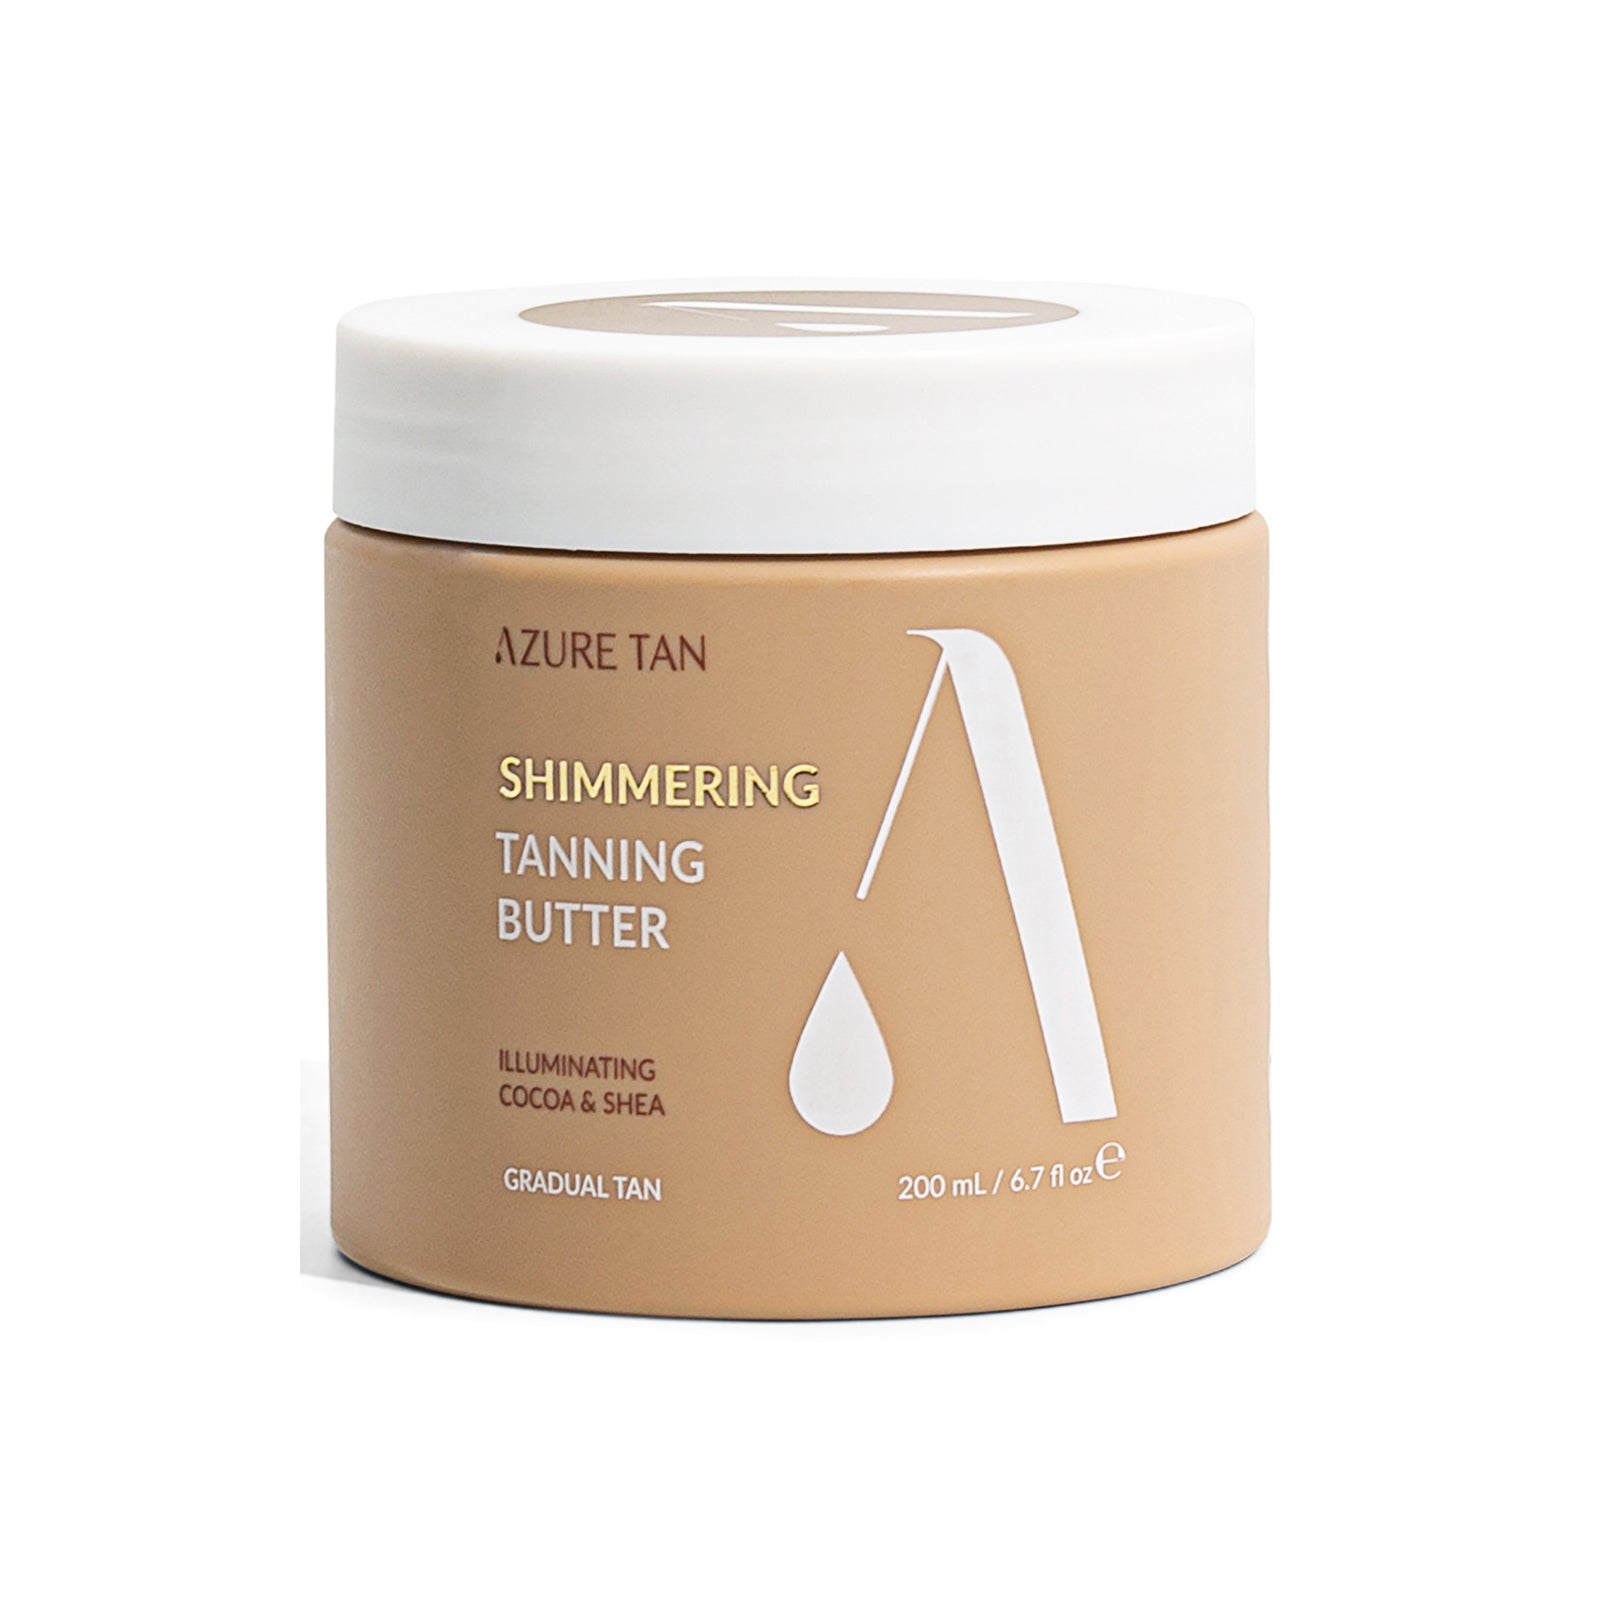 Azure Tan Shimmering Tanning Butter Gradual Tan 200ml